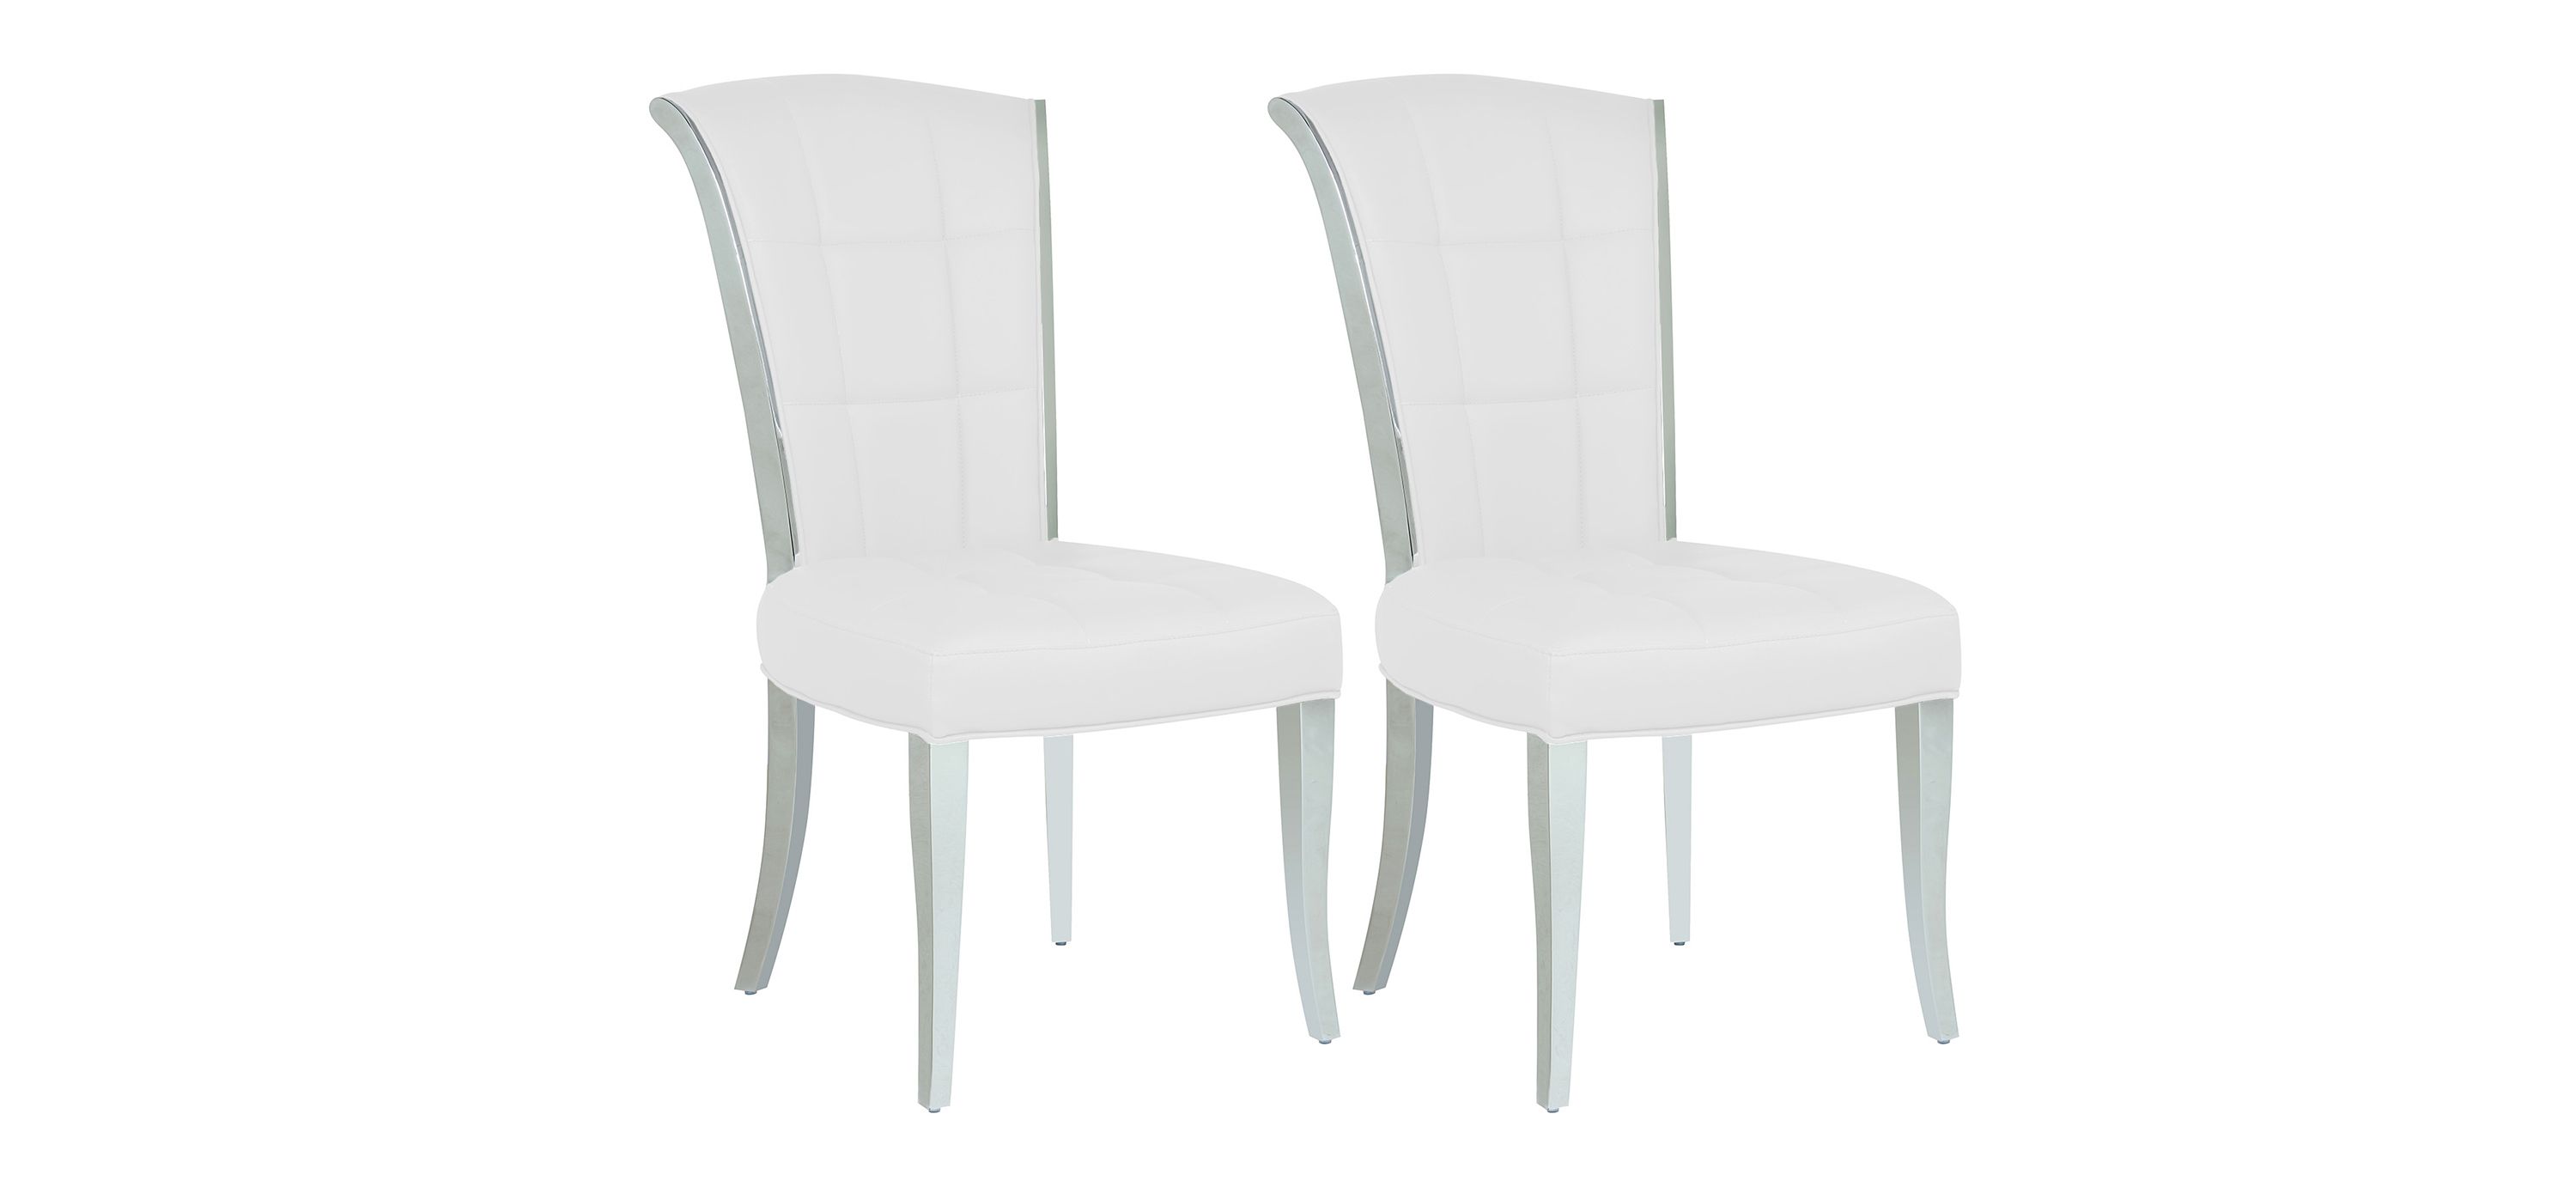 Irisi Dining Chair - Set of 2